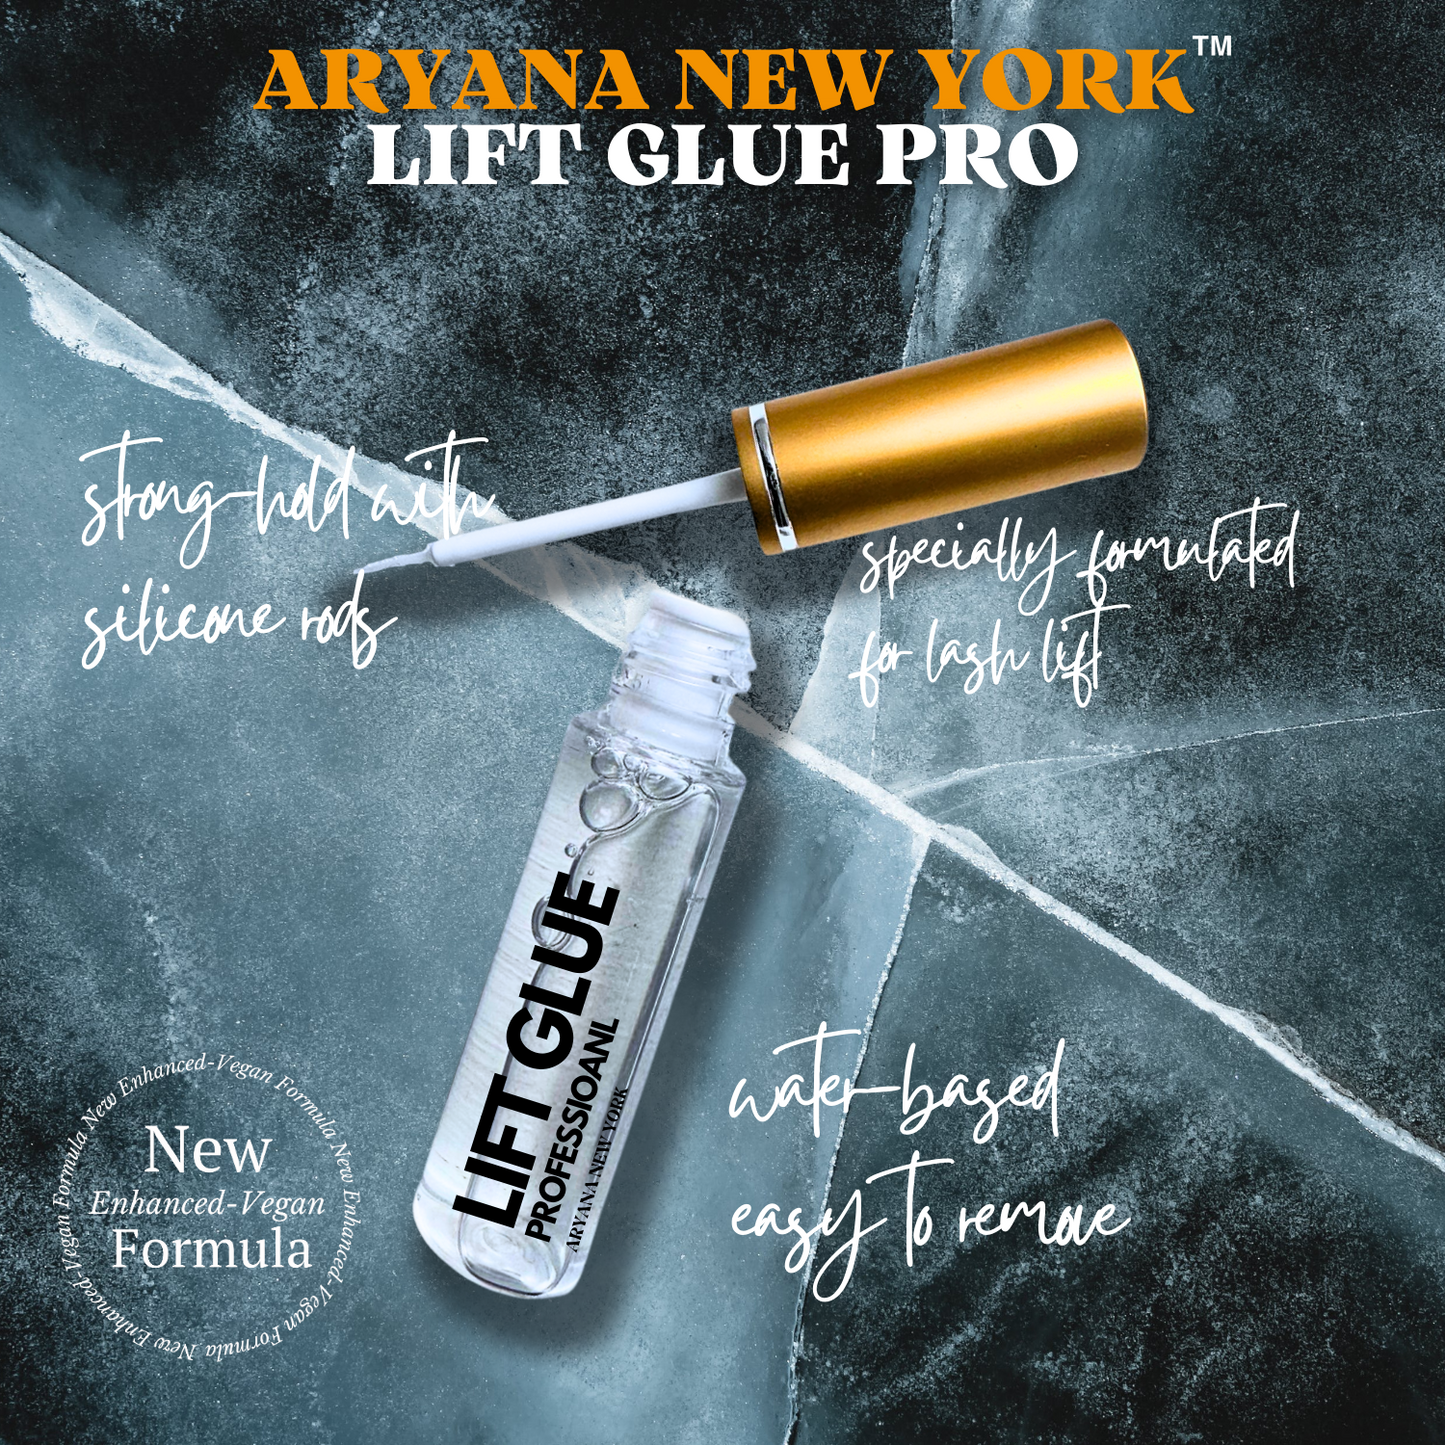 ARYANA NEW YORK Lash Lift And Brow Lamination Kit - Professional Series